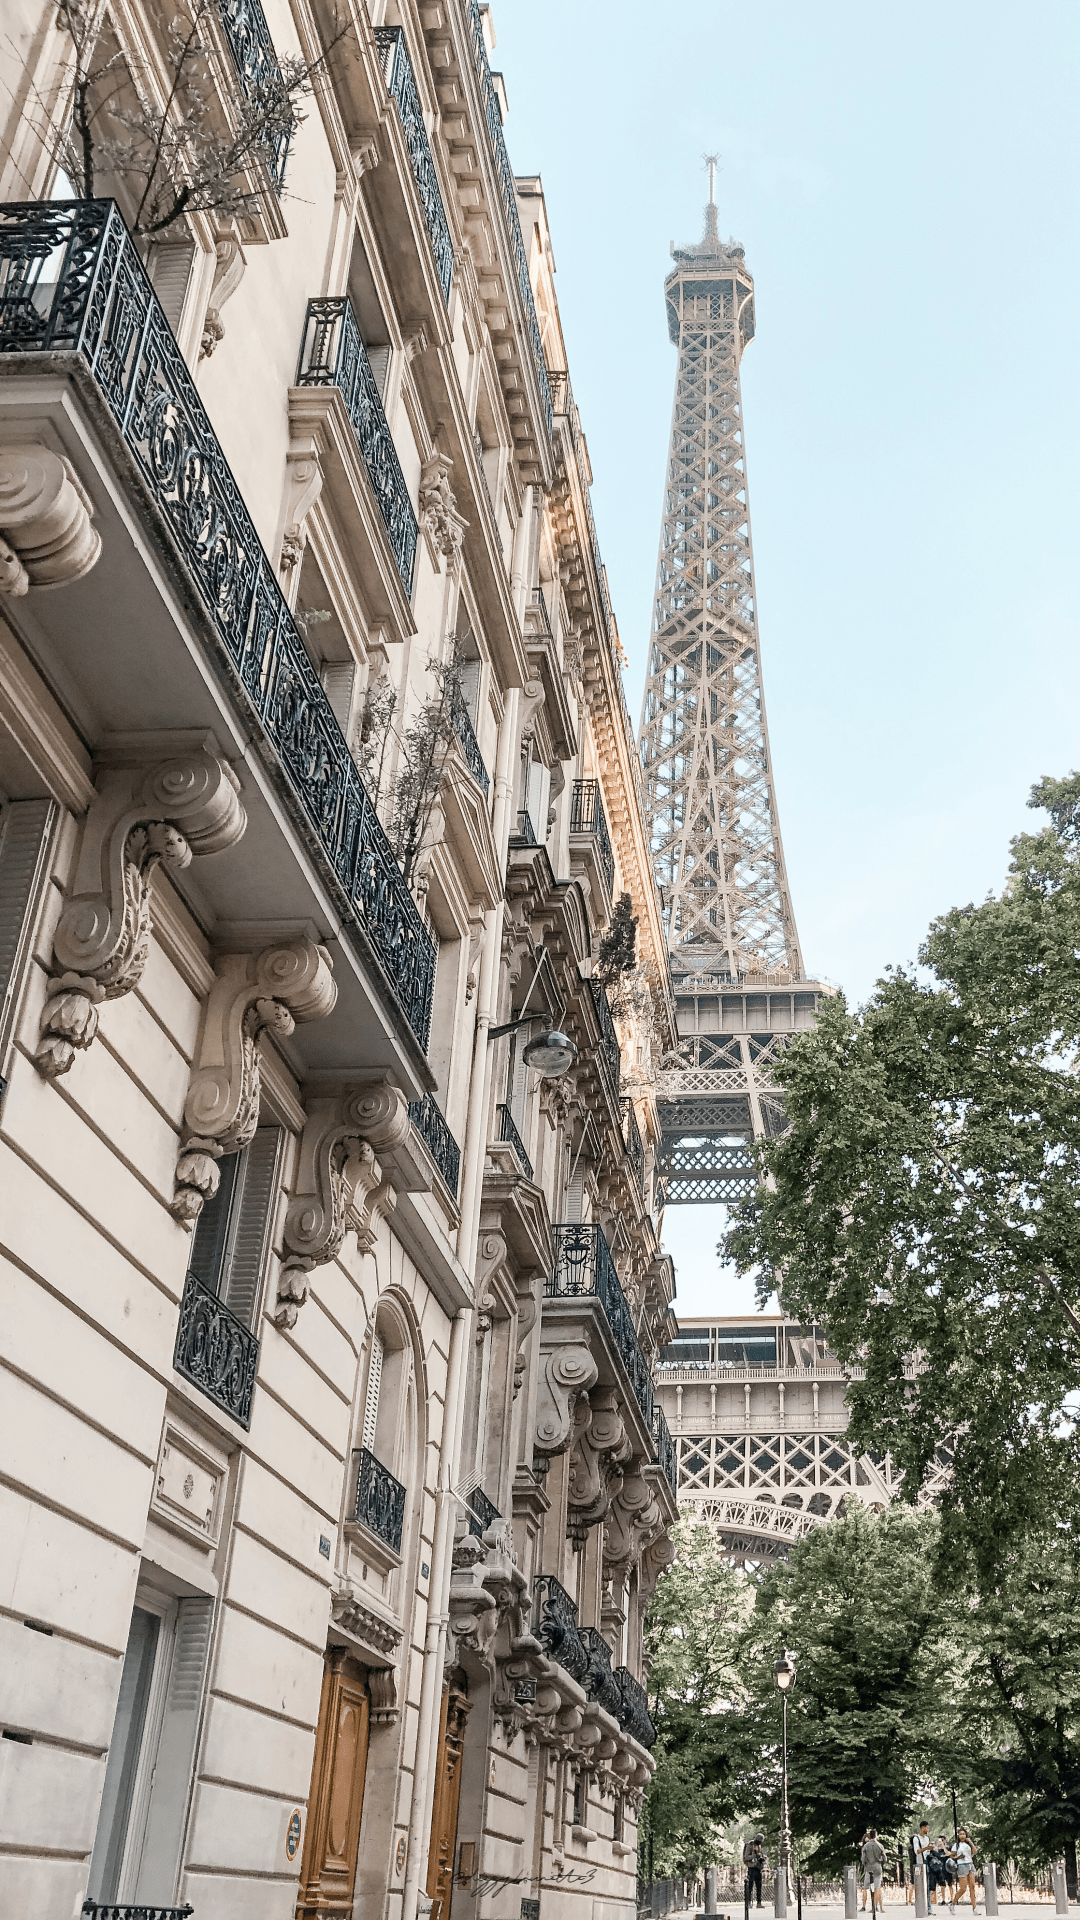 A street view of the Eiffel Tower in Paris, France. - Paris